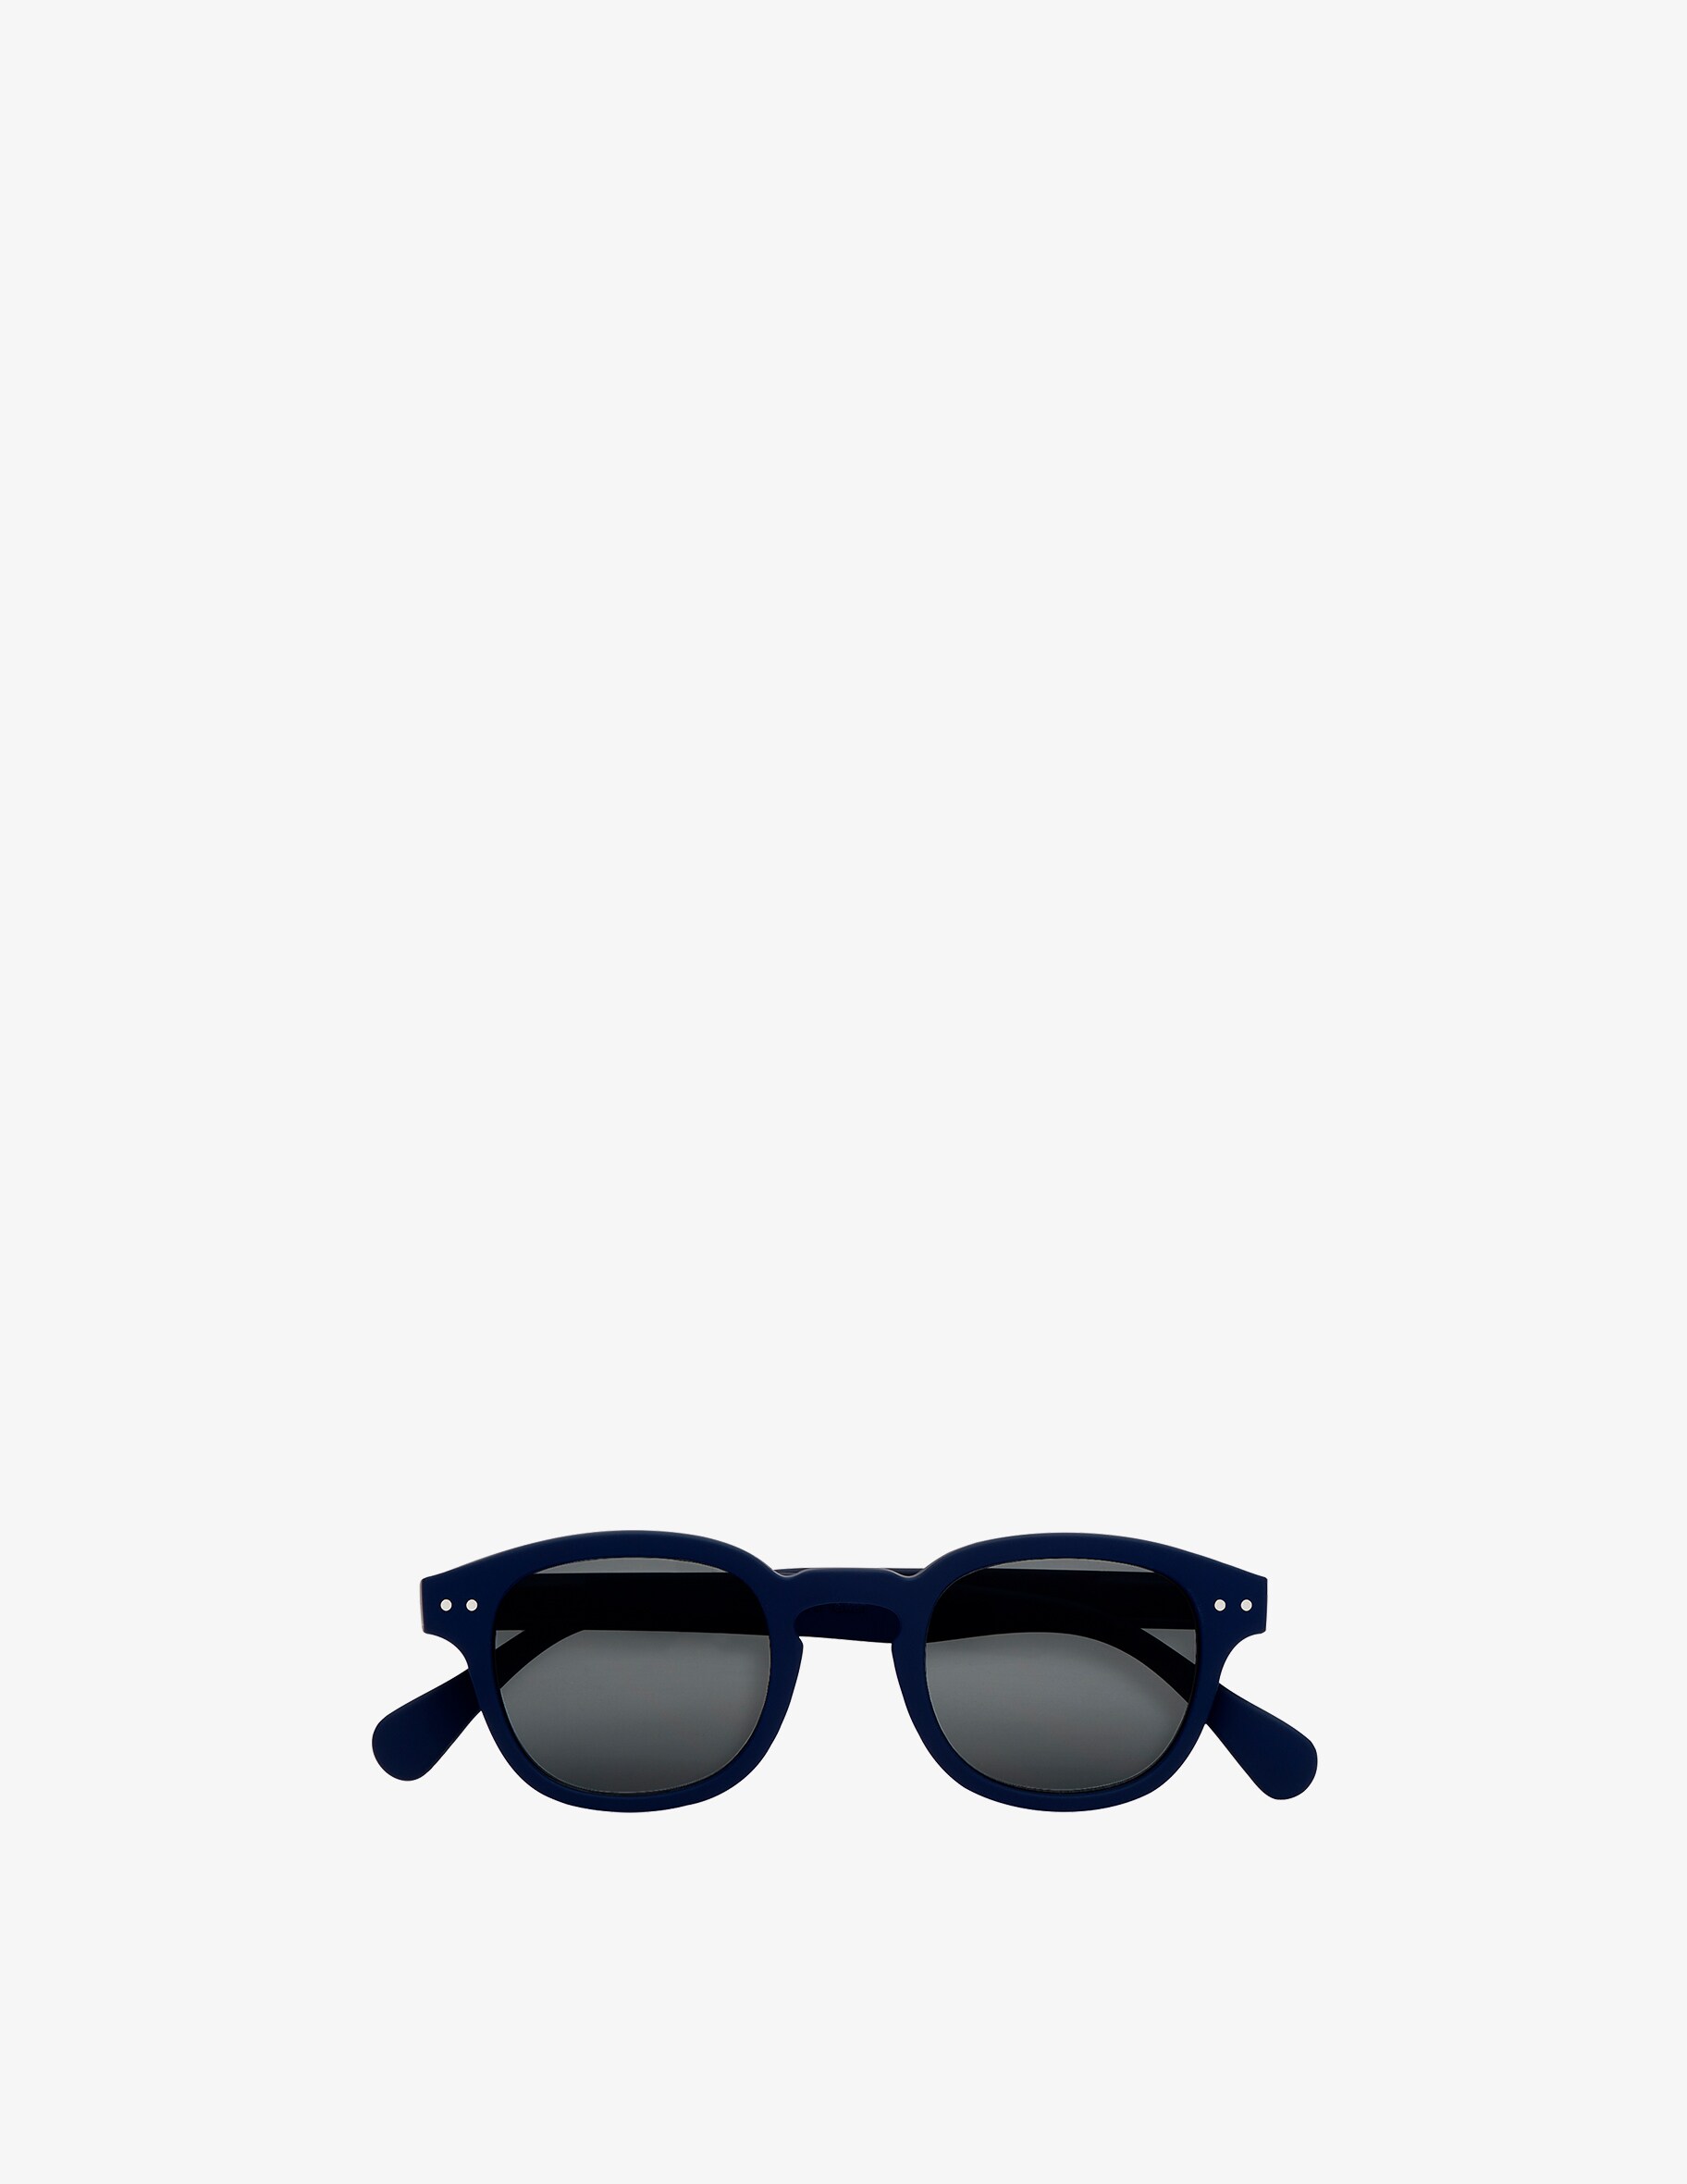 Солнцезащитные очки Модель #C Темно-Синие Izipizi очки izipizi оправа c черепаший синий